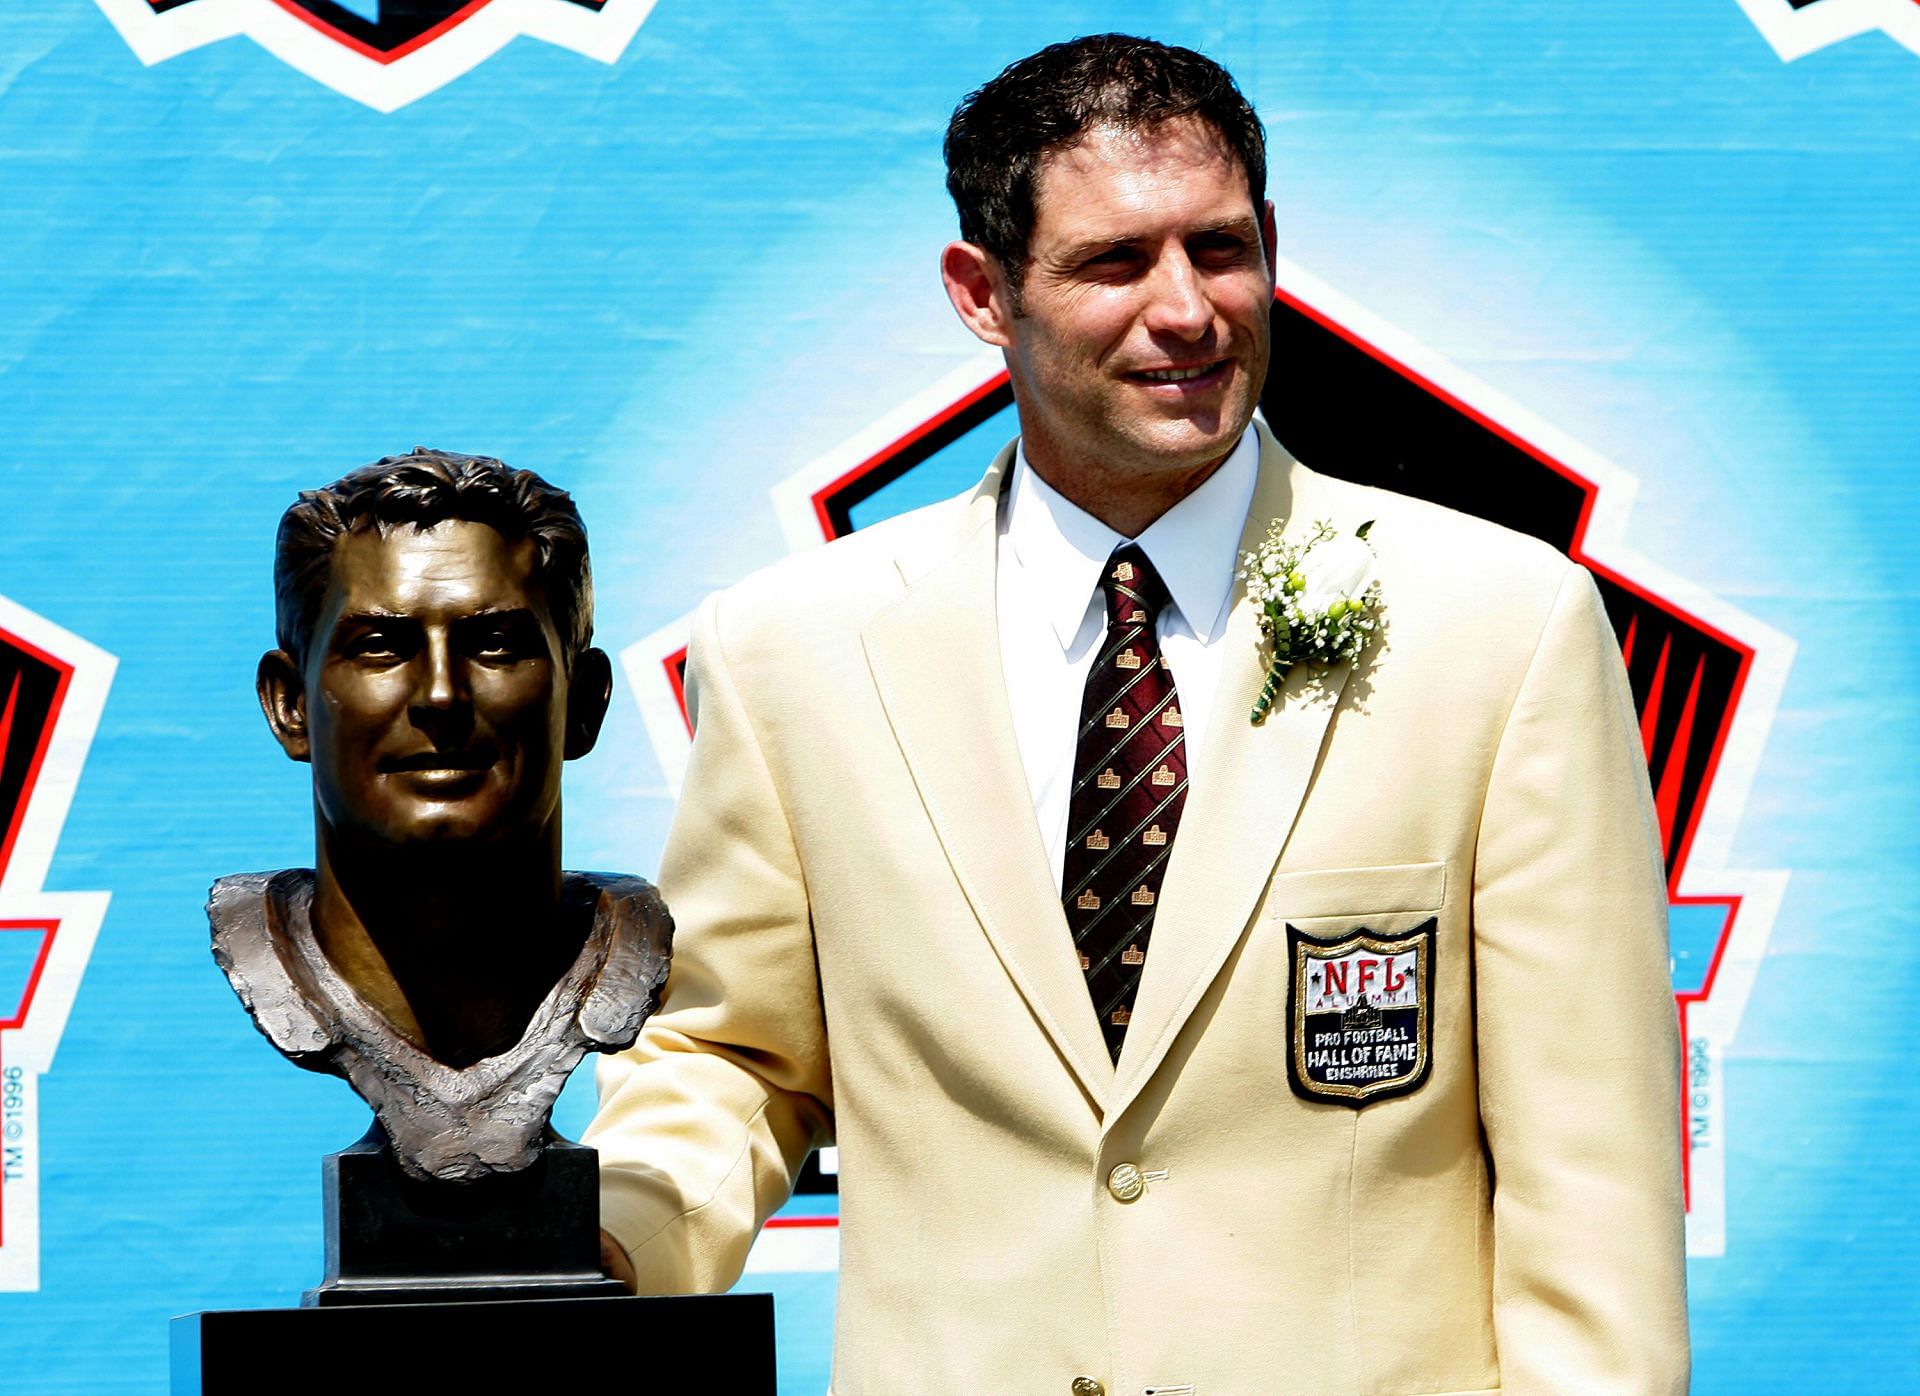 Hall of Fame quarterback Steve Young